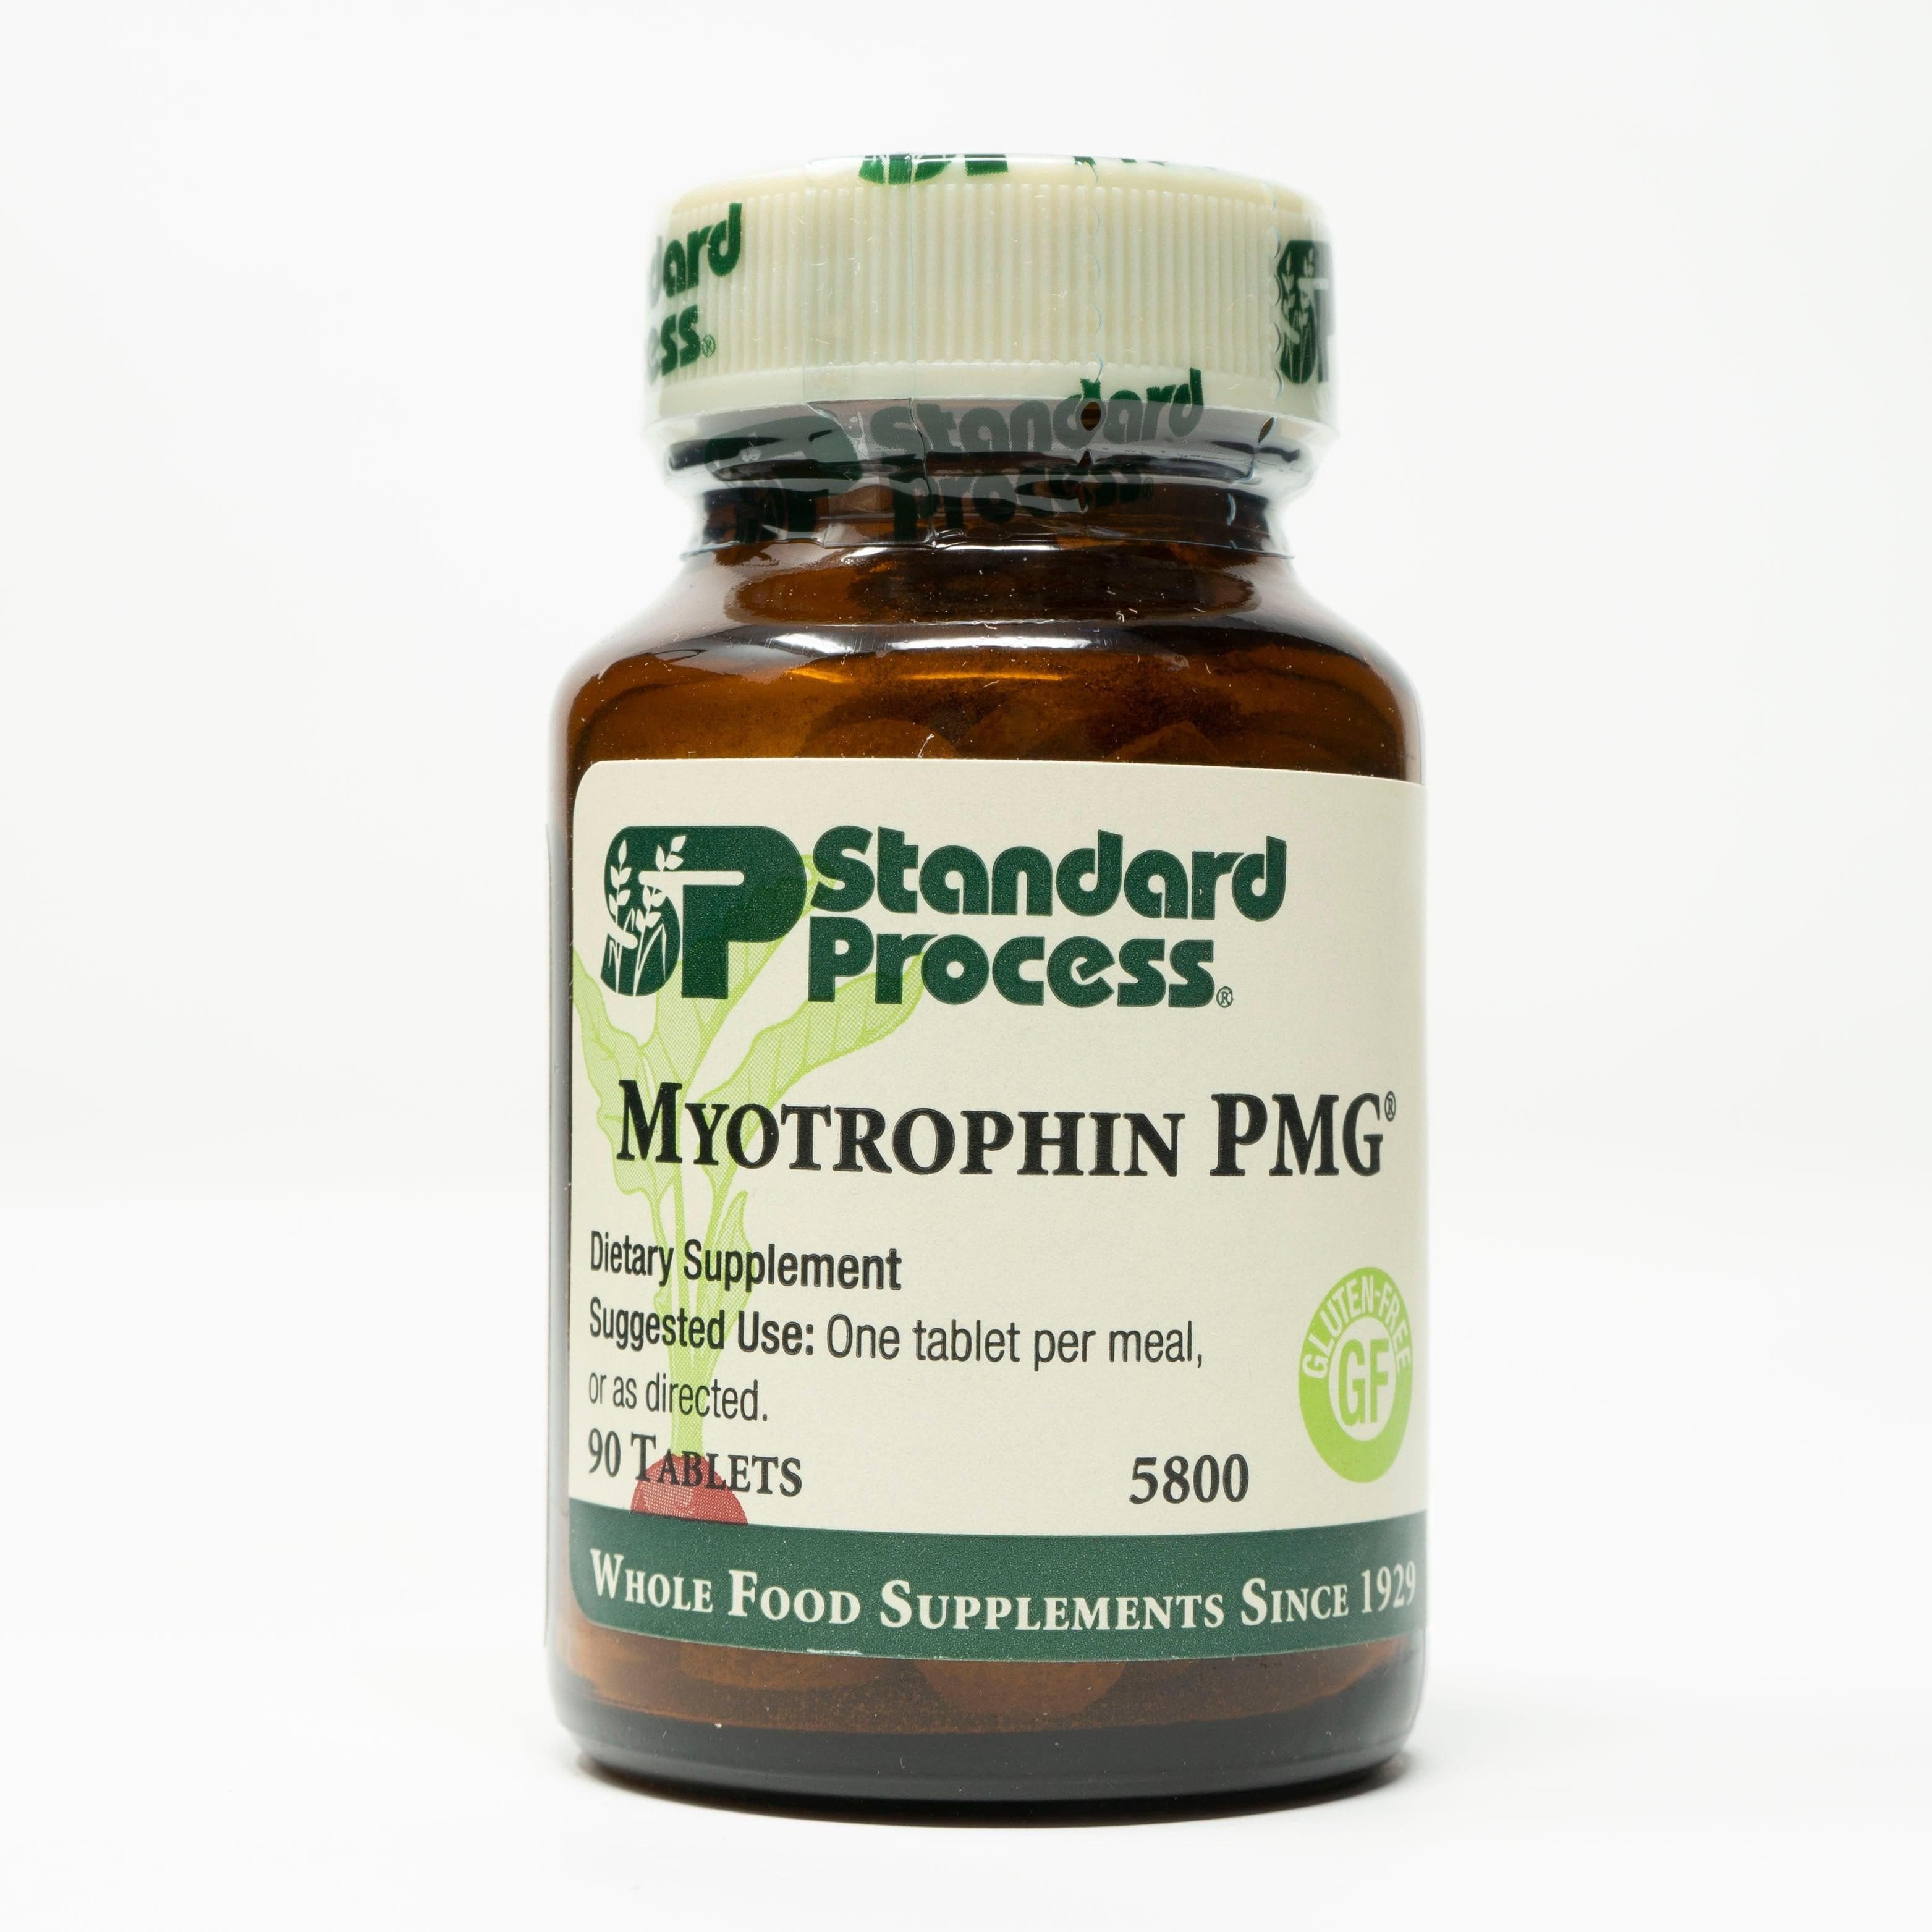 Myotrophin PMG, 90 Tablets, by Standard Process.